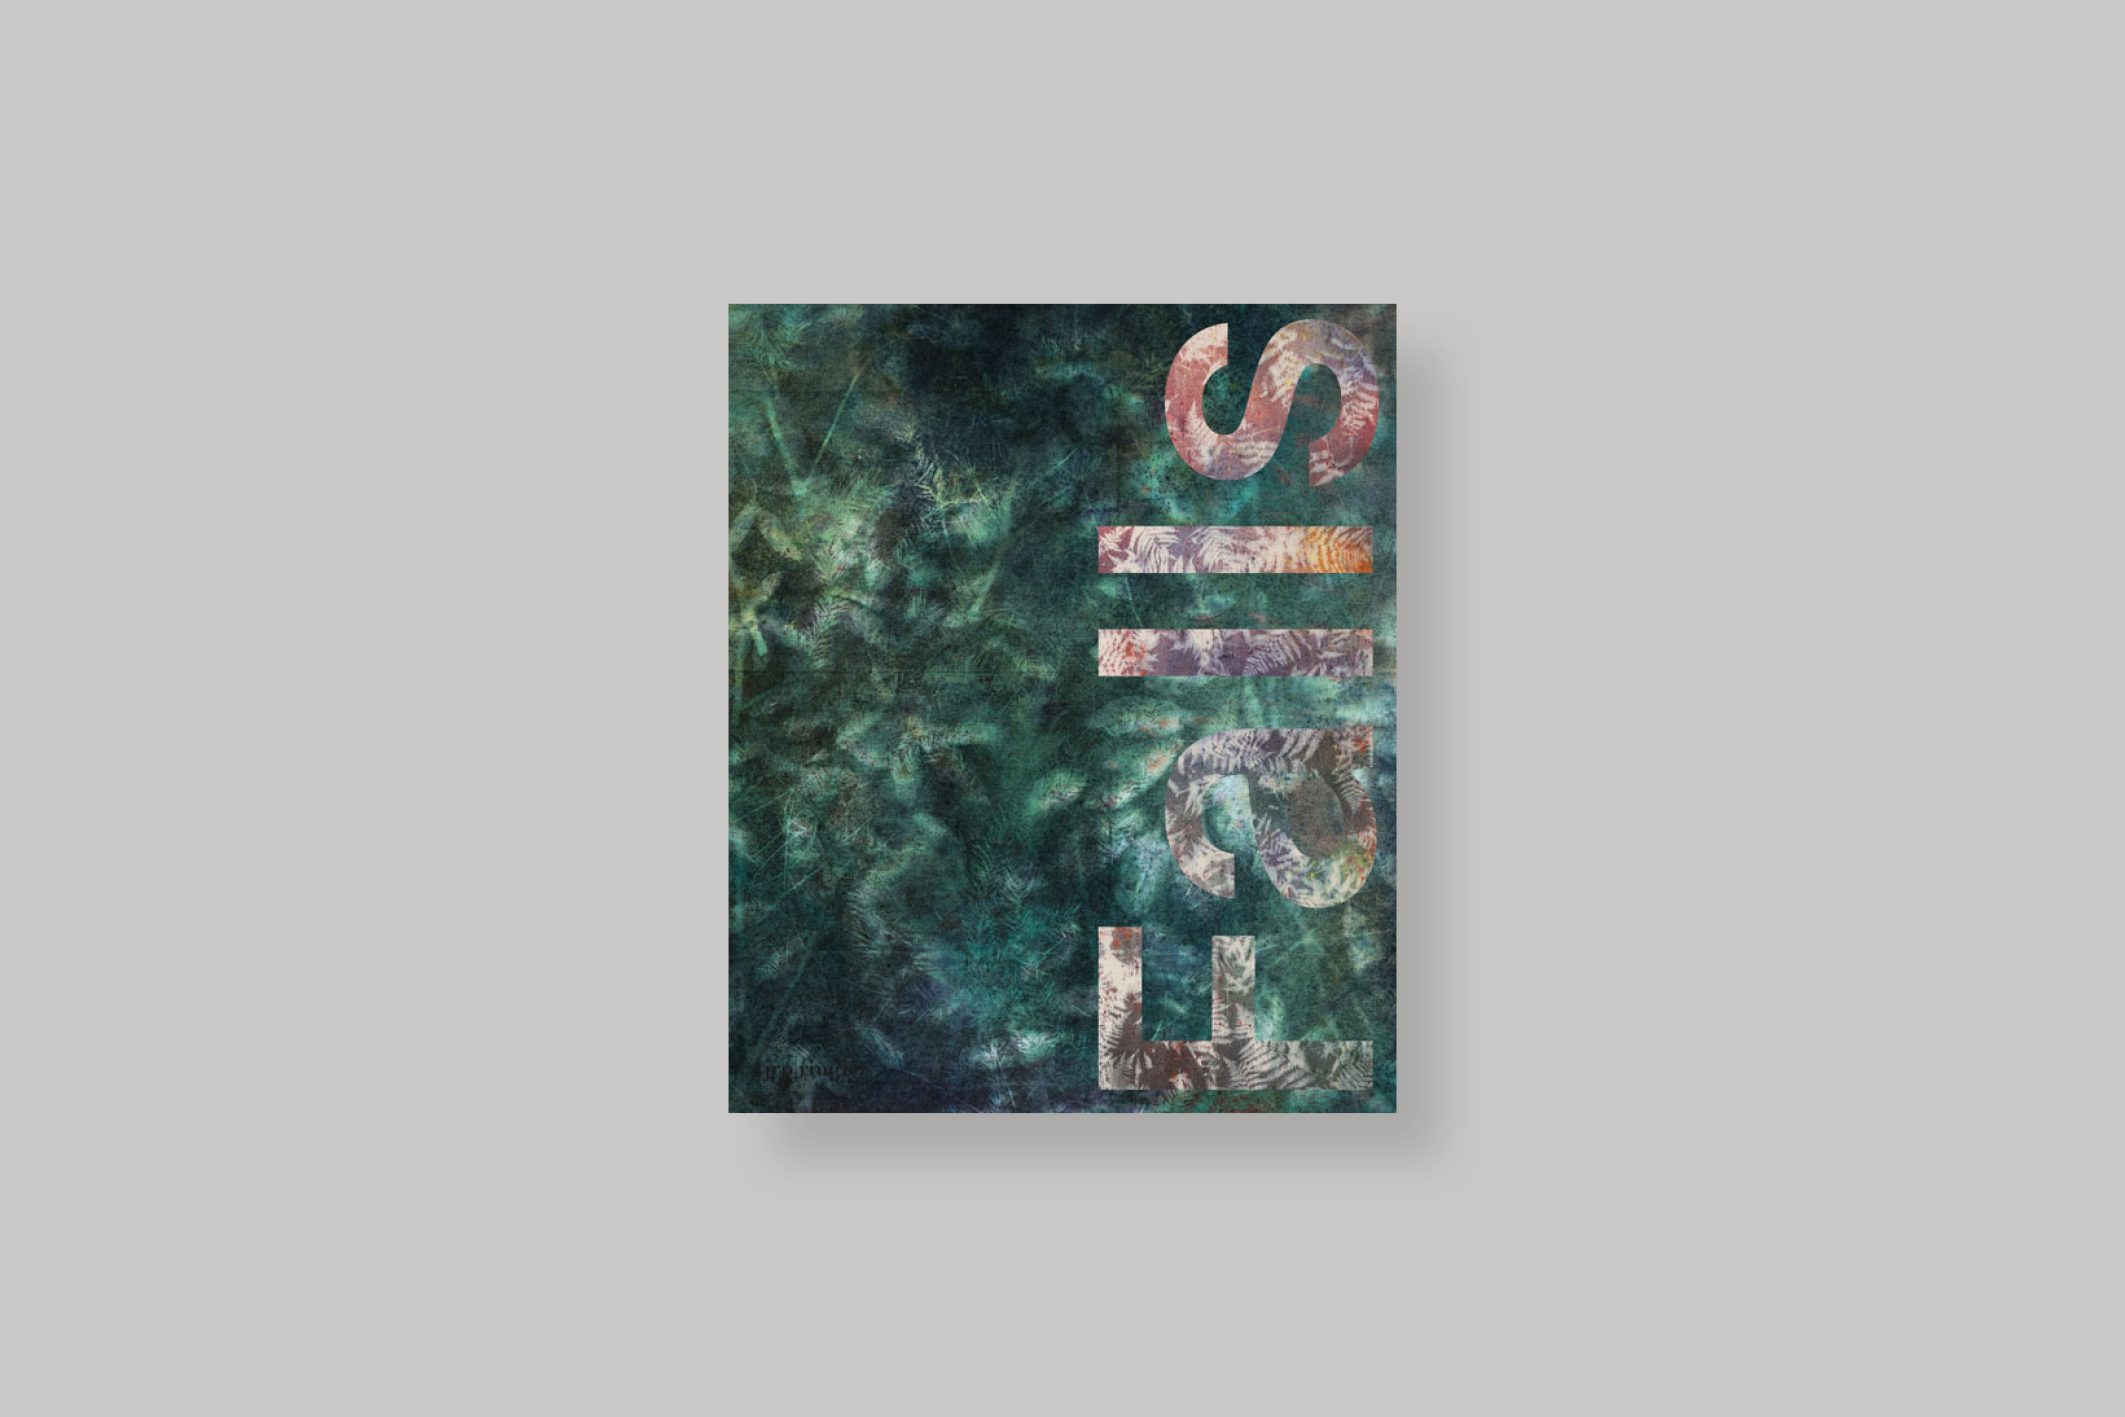 Sam-Falls-jrp-editions-cover